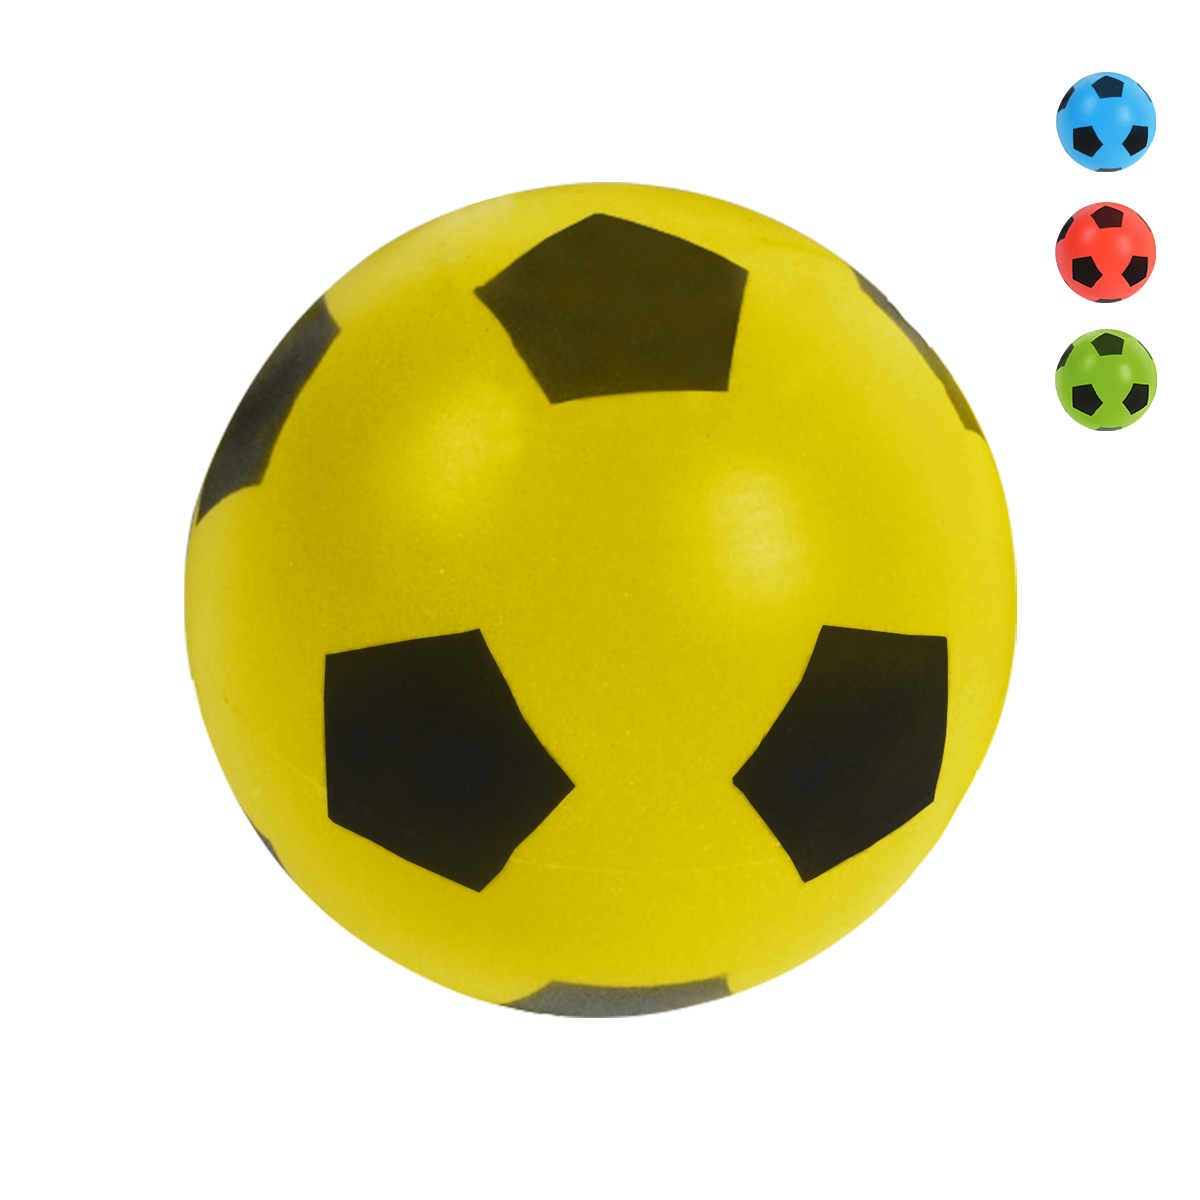 Ballon multisports - Mousse